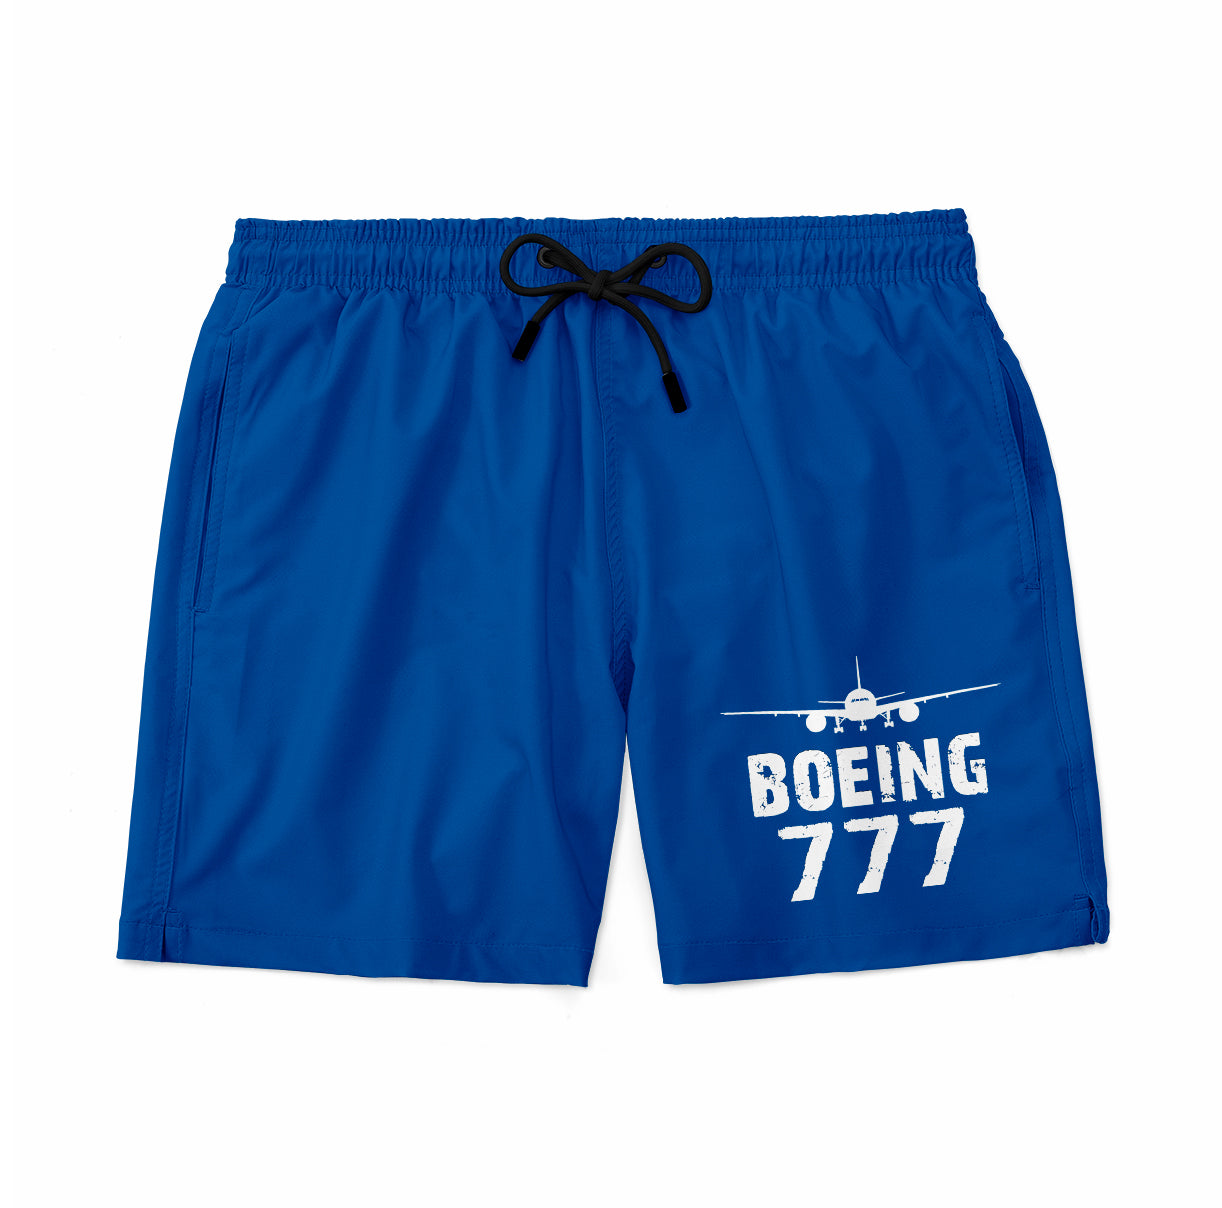 Boeing 777 & Plane Designed Swim Trunks & Shorts